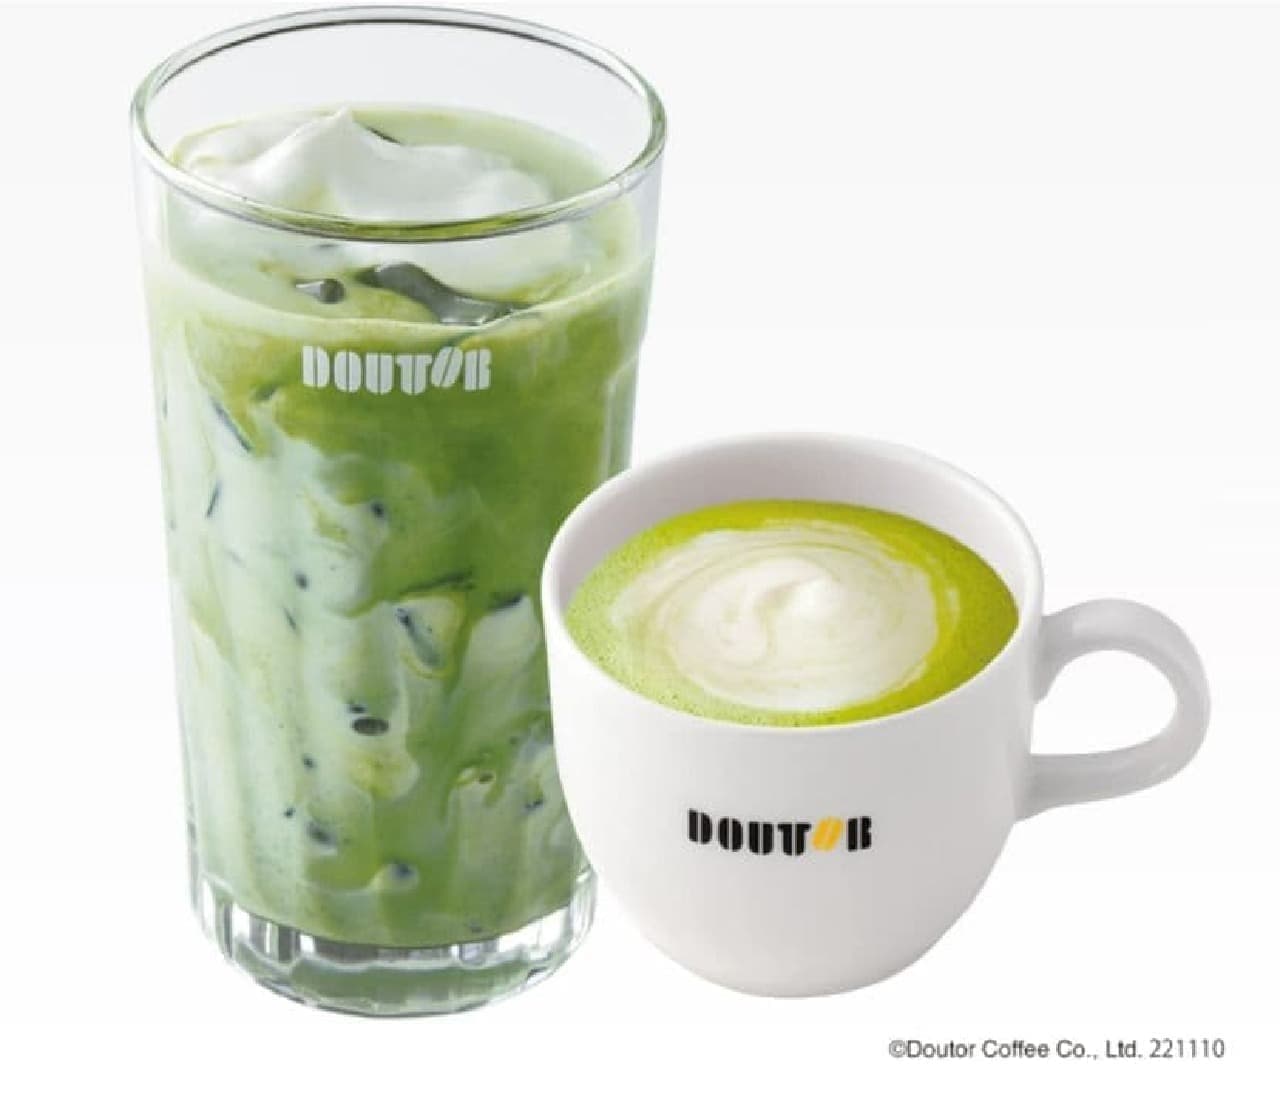 Doutor "Luxurious Matcha Latte with Kyoto-grown Ichibancha Green Tea".